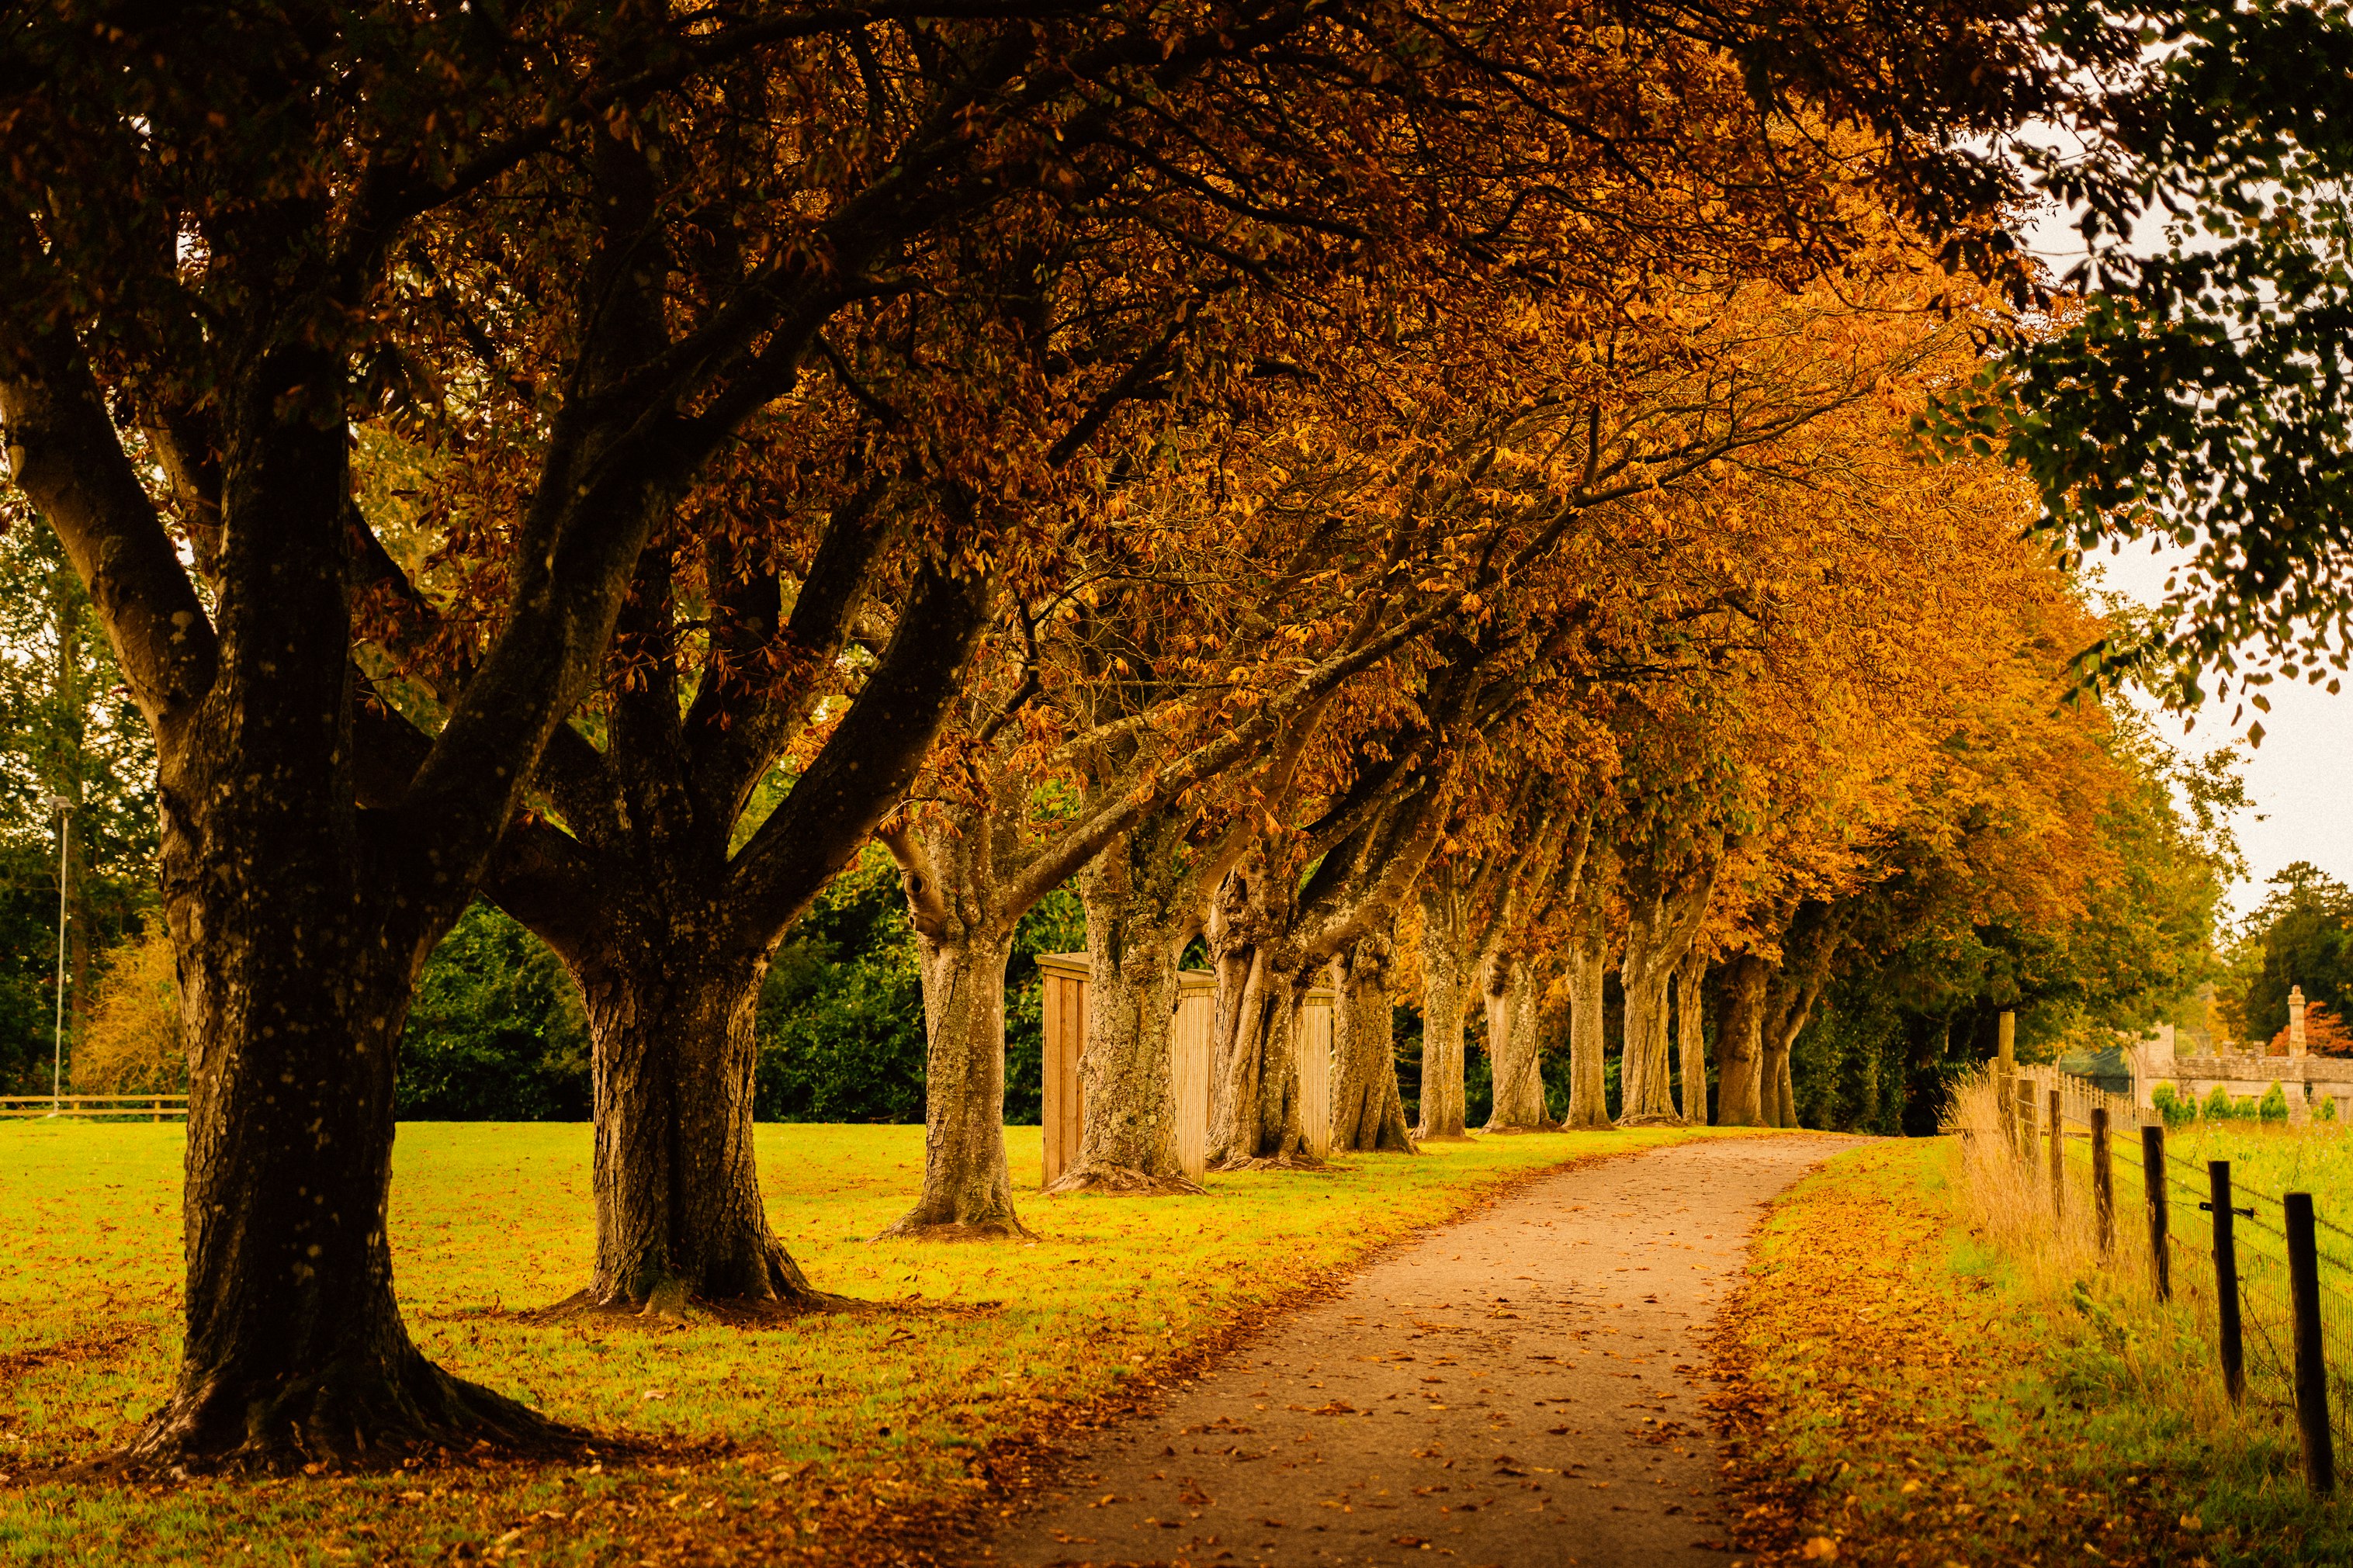 brown pathway between trees during daytime